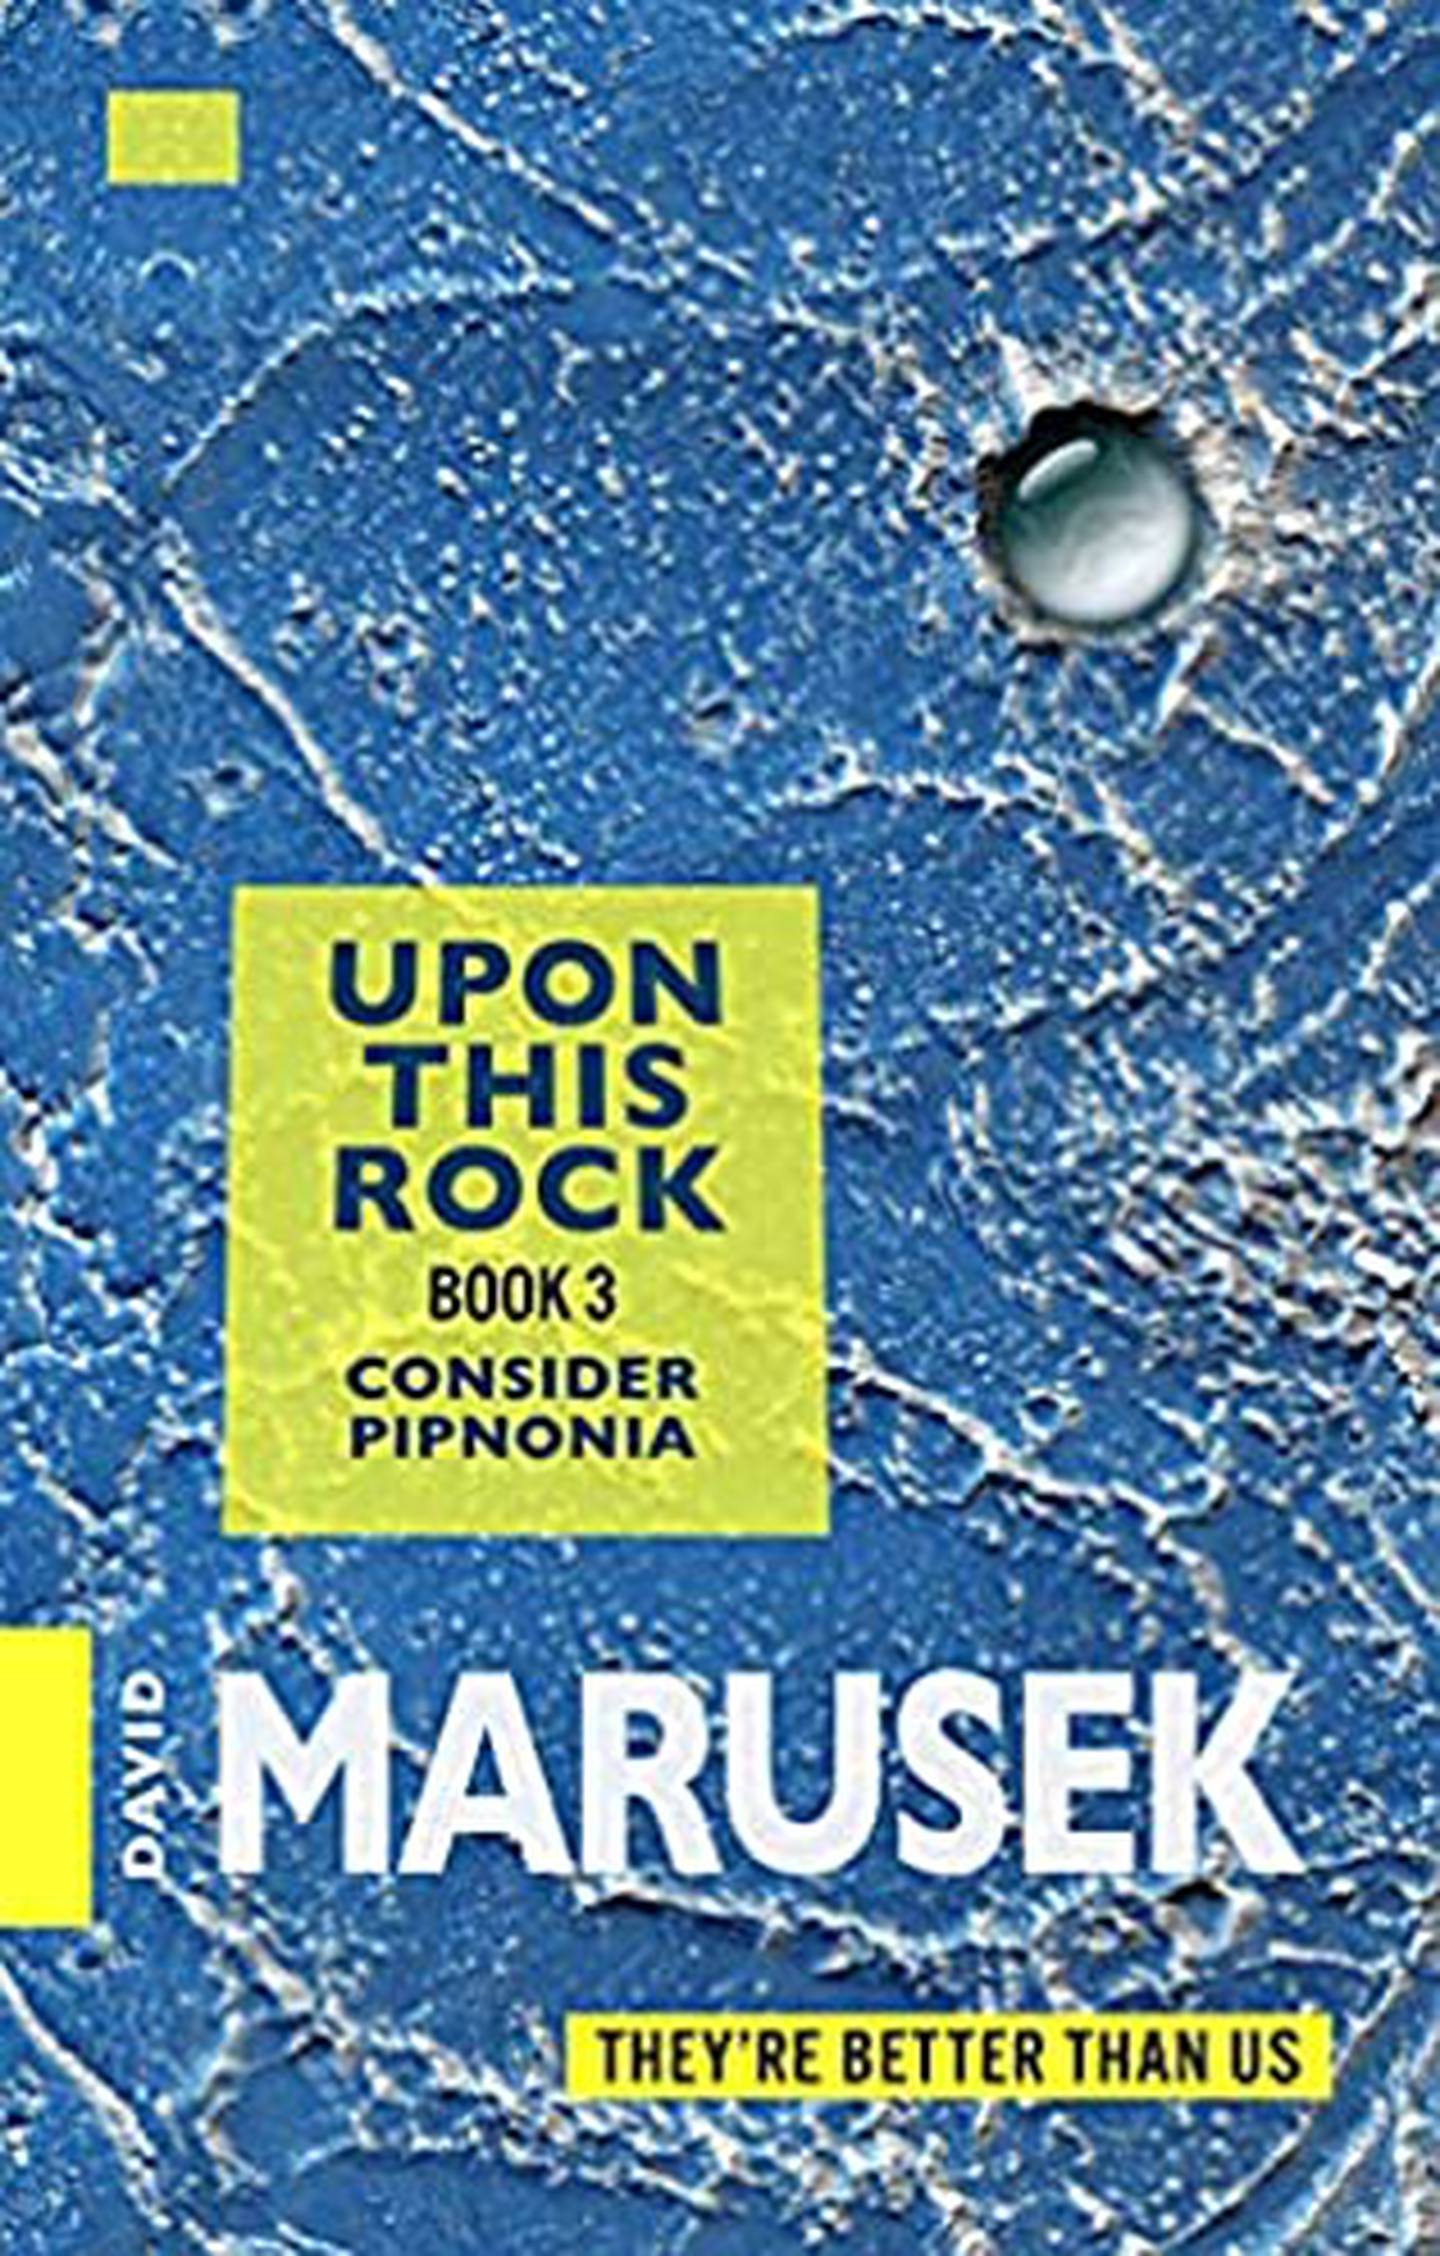 Upon This Rock: Book 3 - Consider Pipnonia